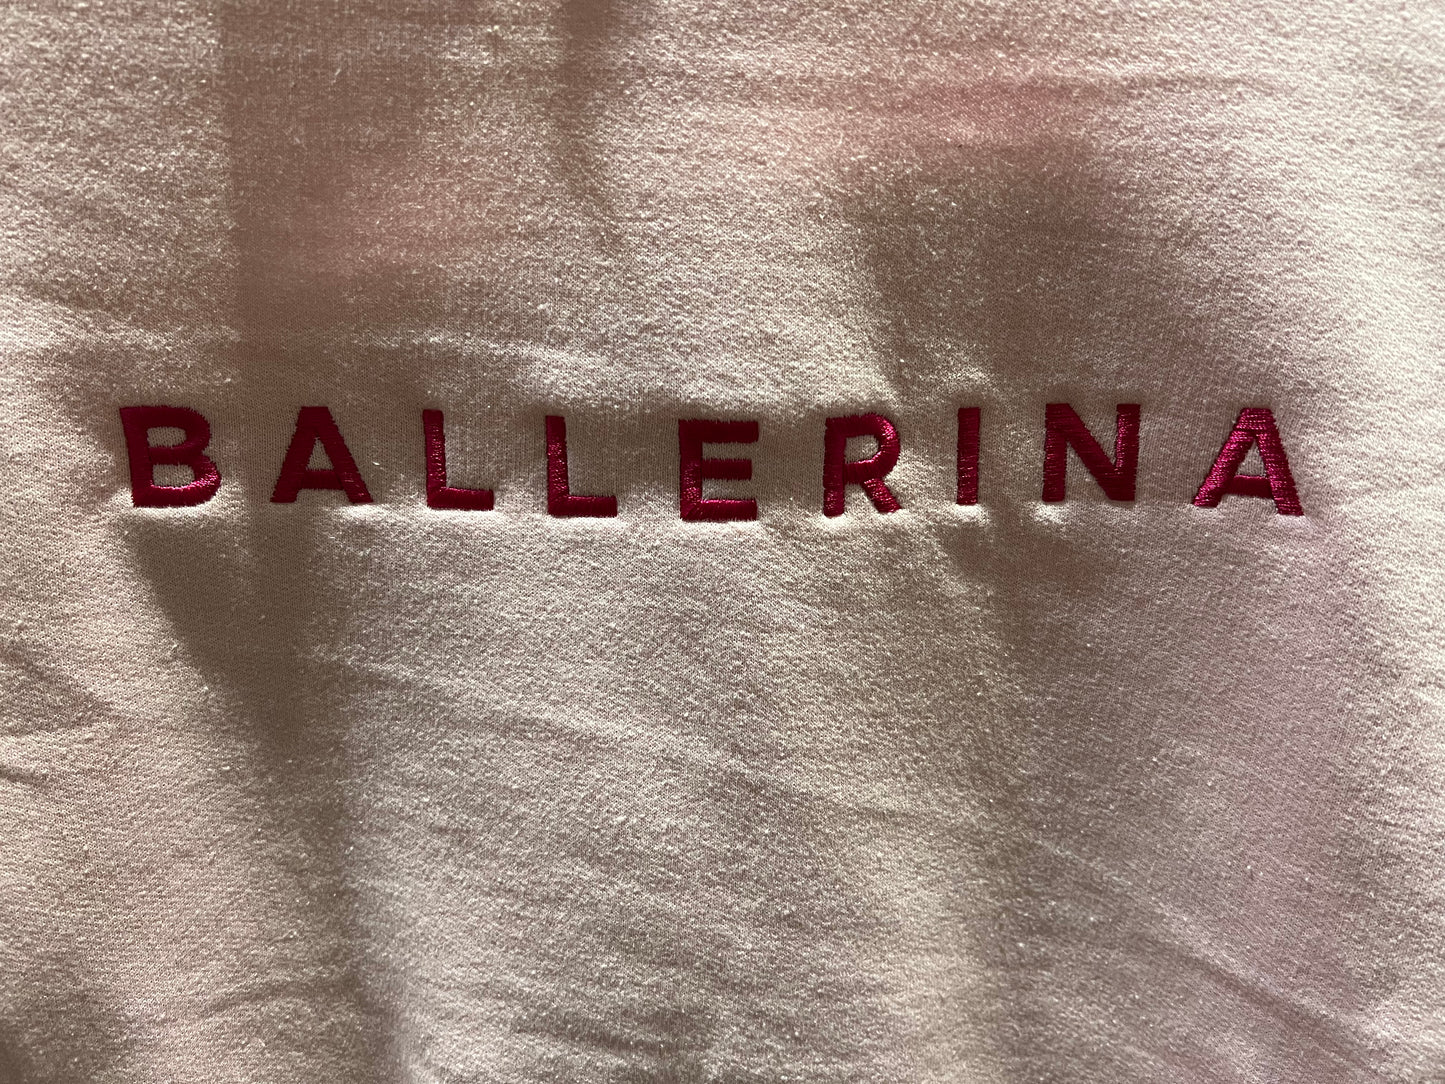 Ballerina Embroidered Sweatshirt